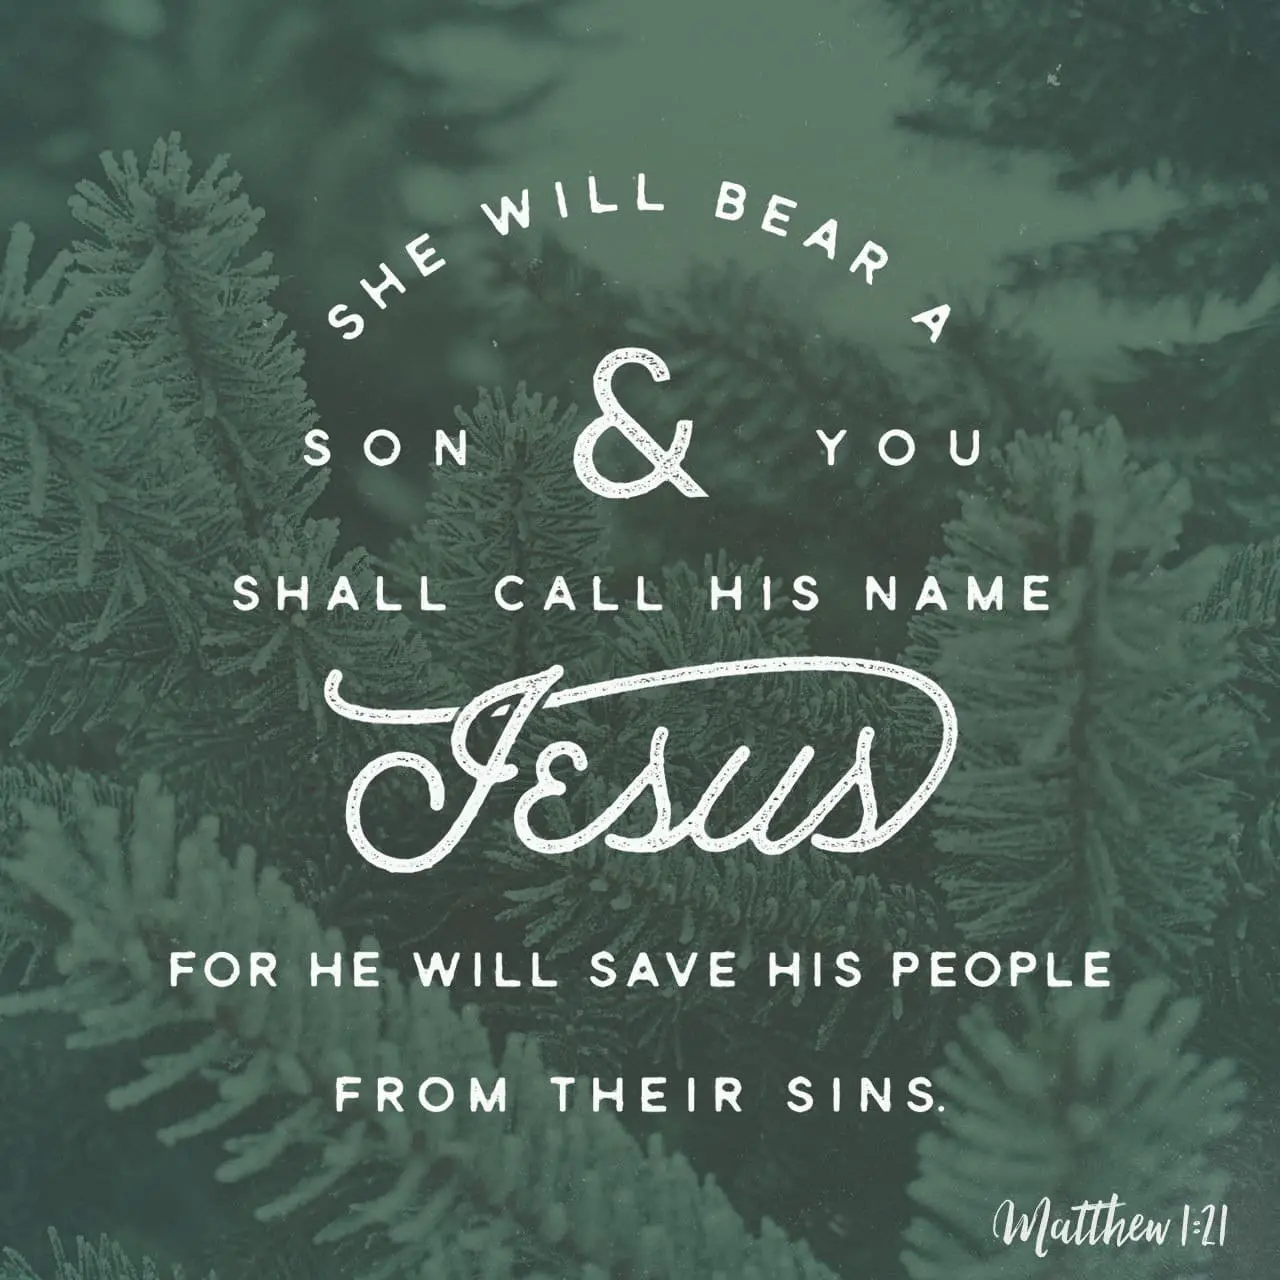 Call his name Jesus - Matthew 1:21